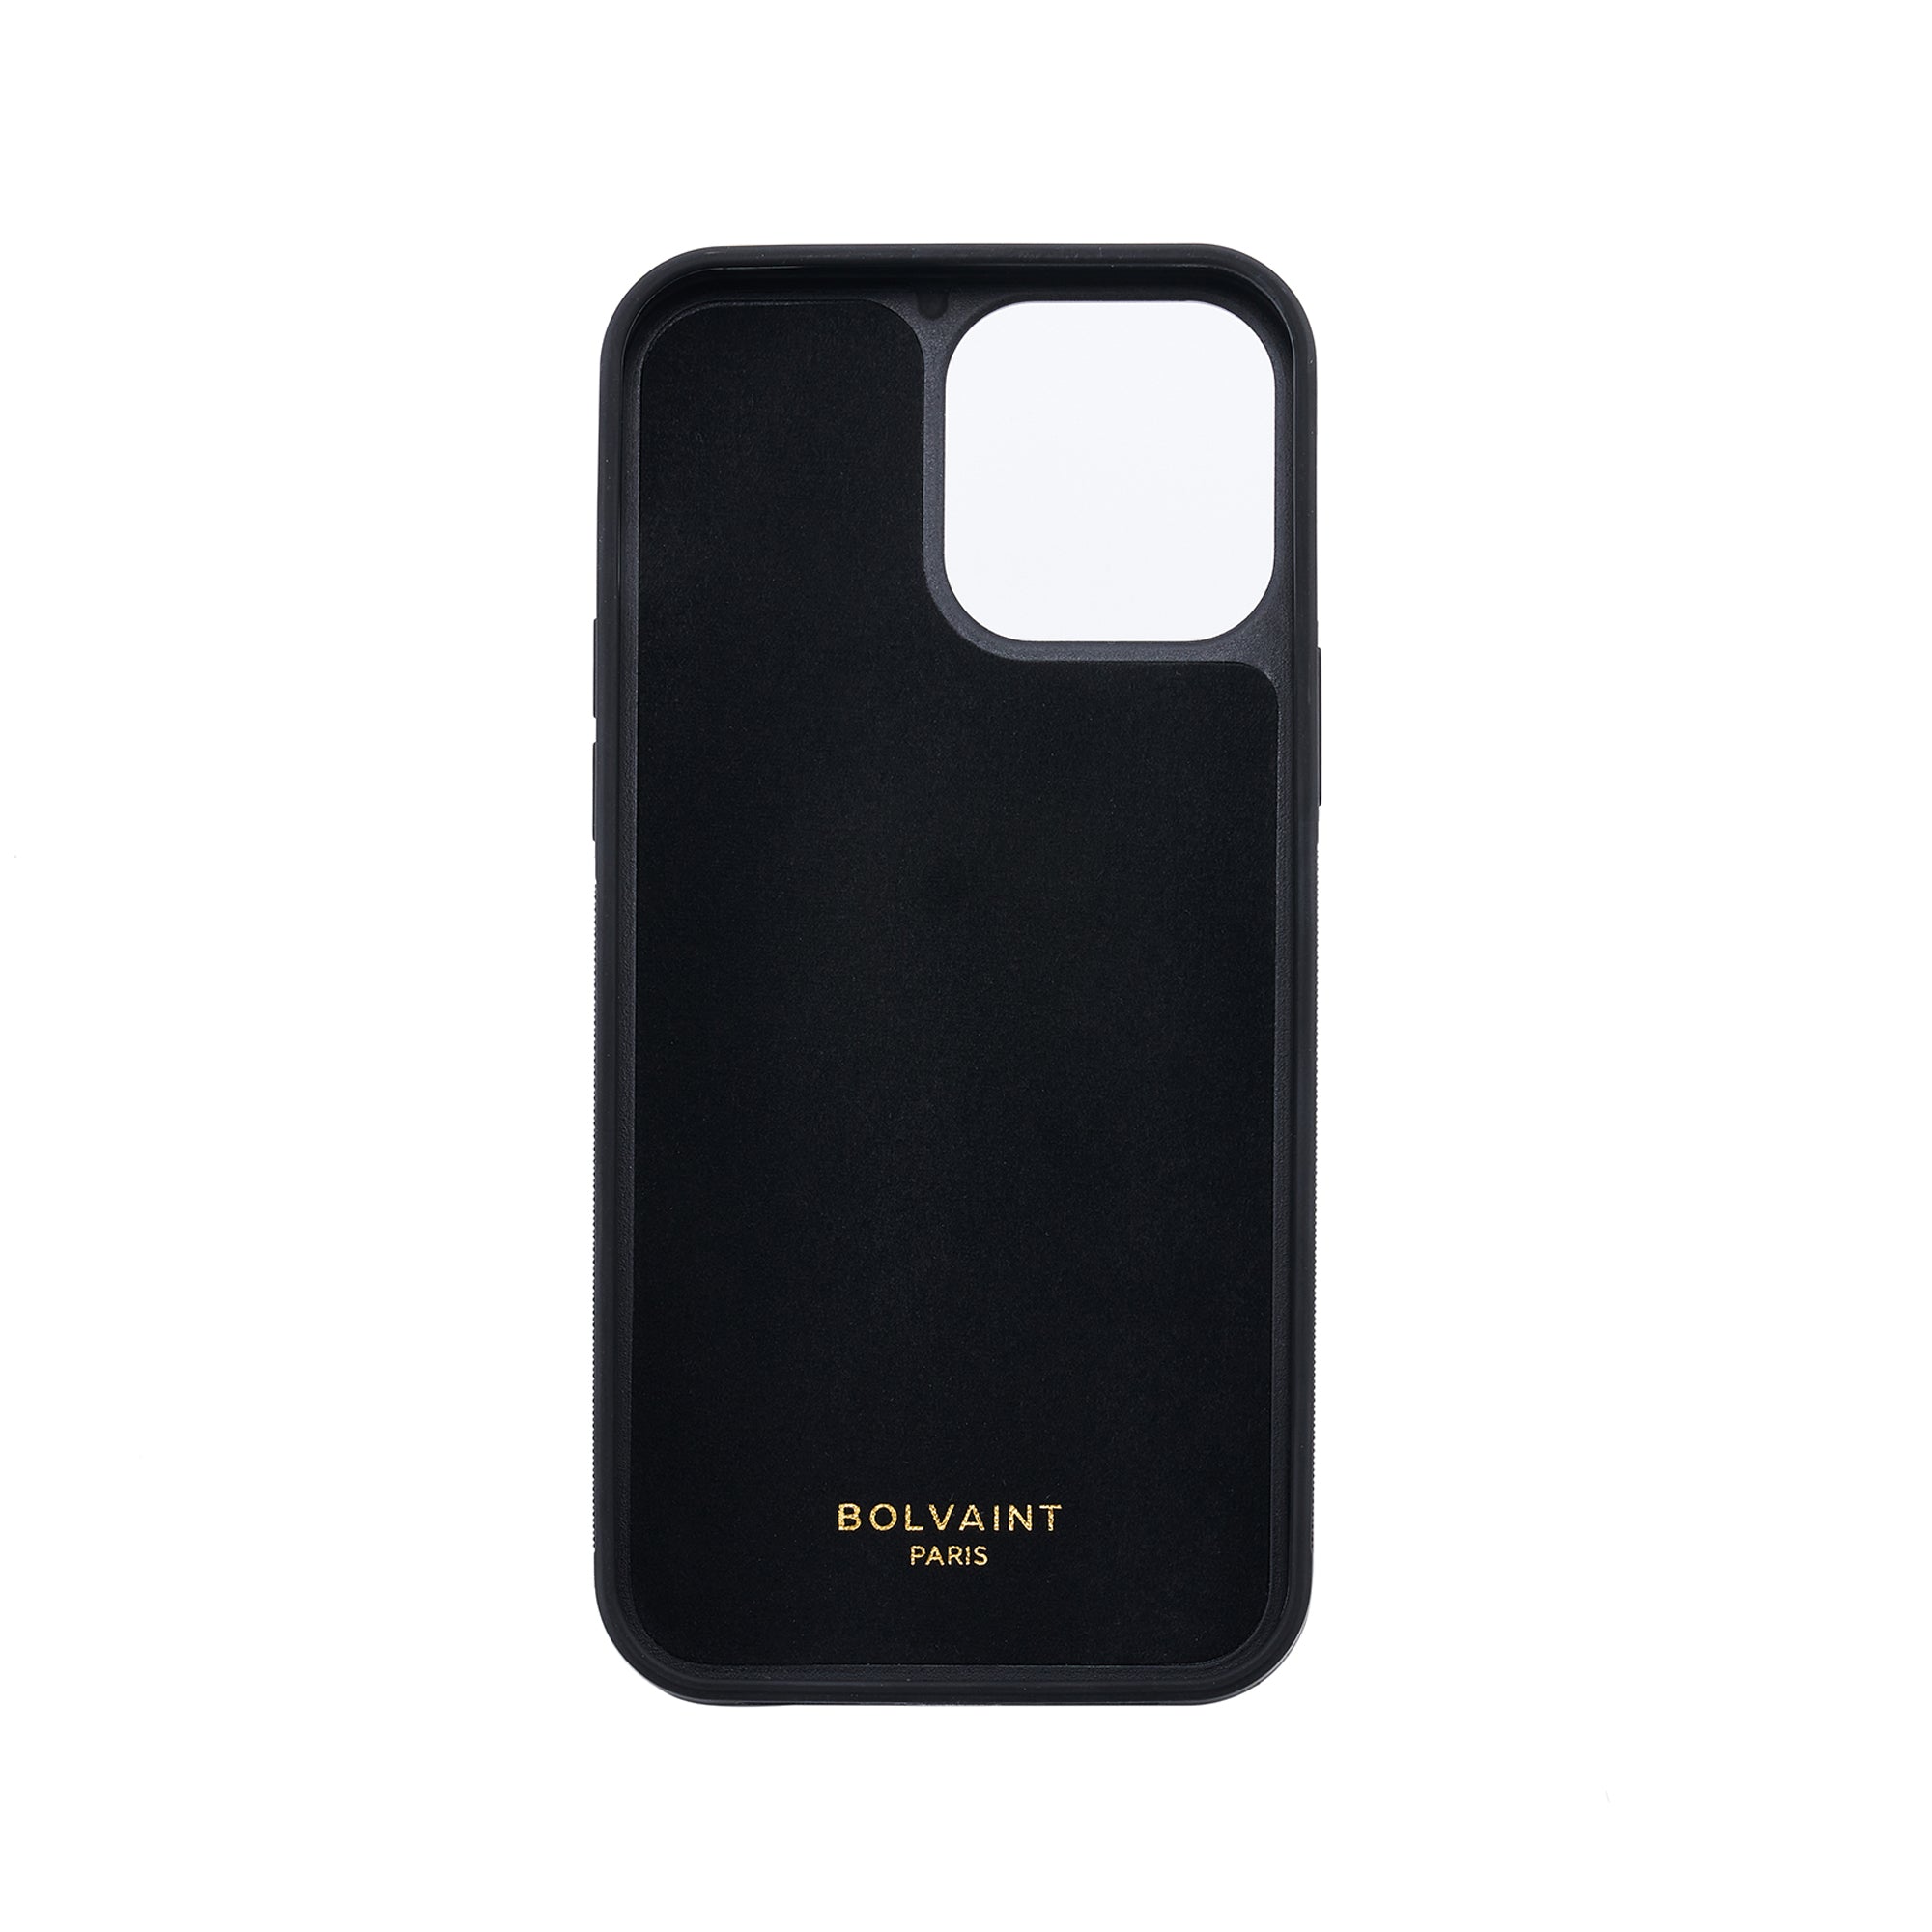 Bolvaint Karter iPhone 13 Pro Max Case in Pebble Grain Black